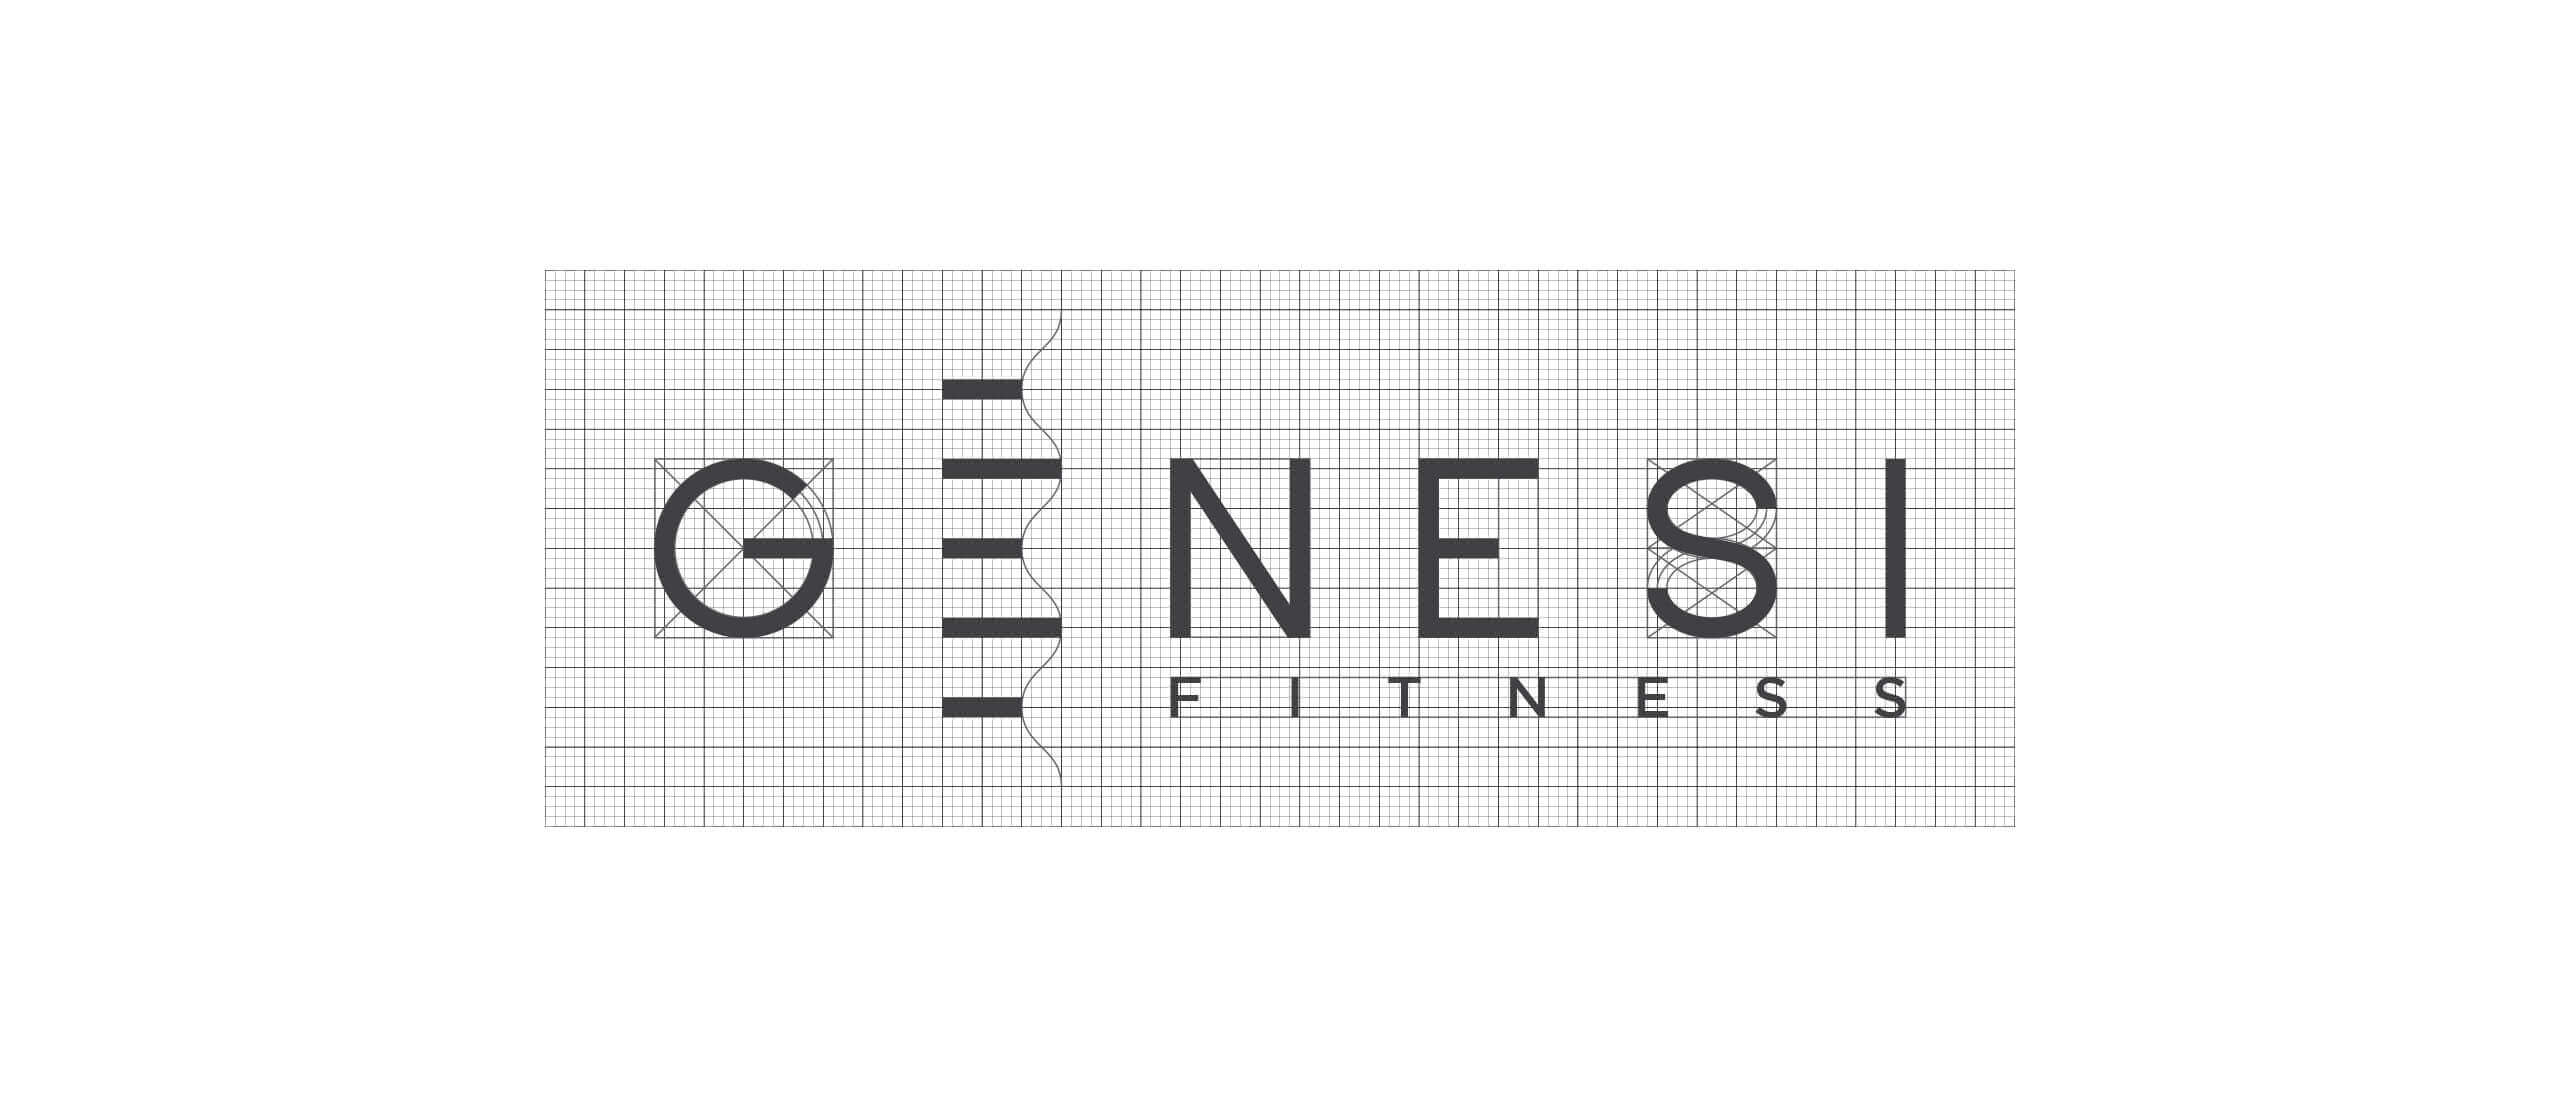 brand genesi fitness immagine coordinata